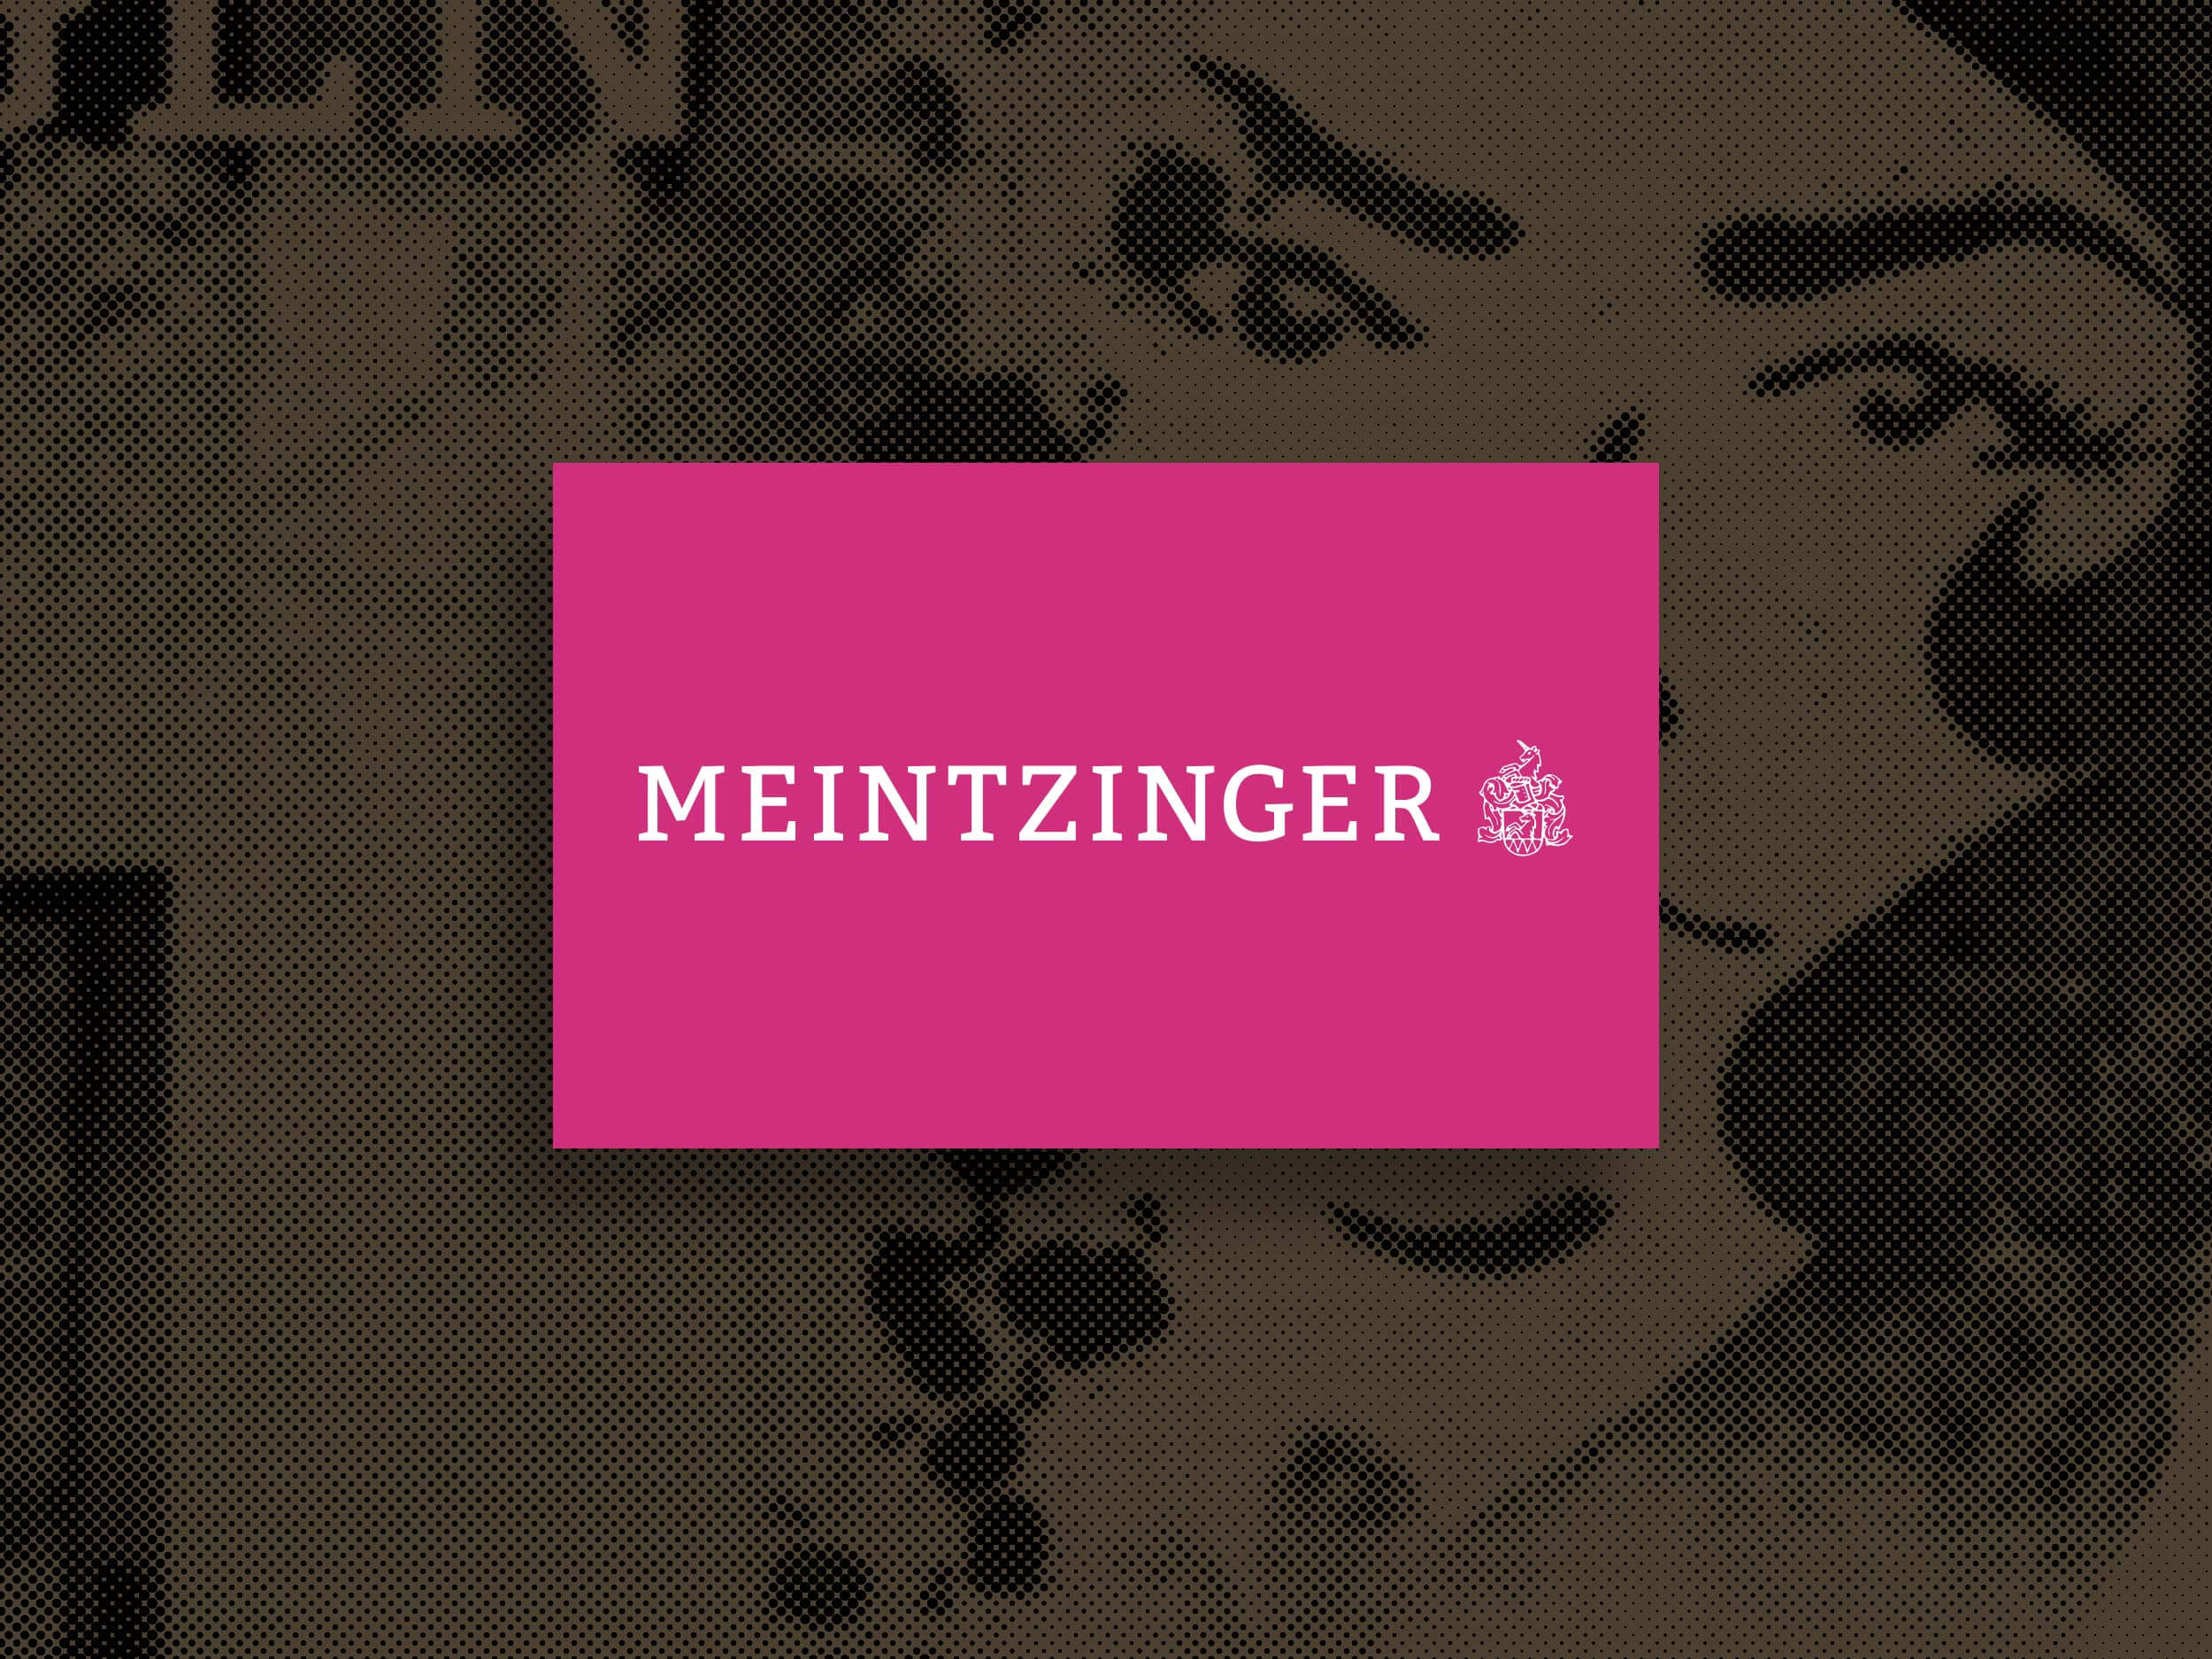 Meintzinger